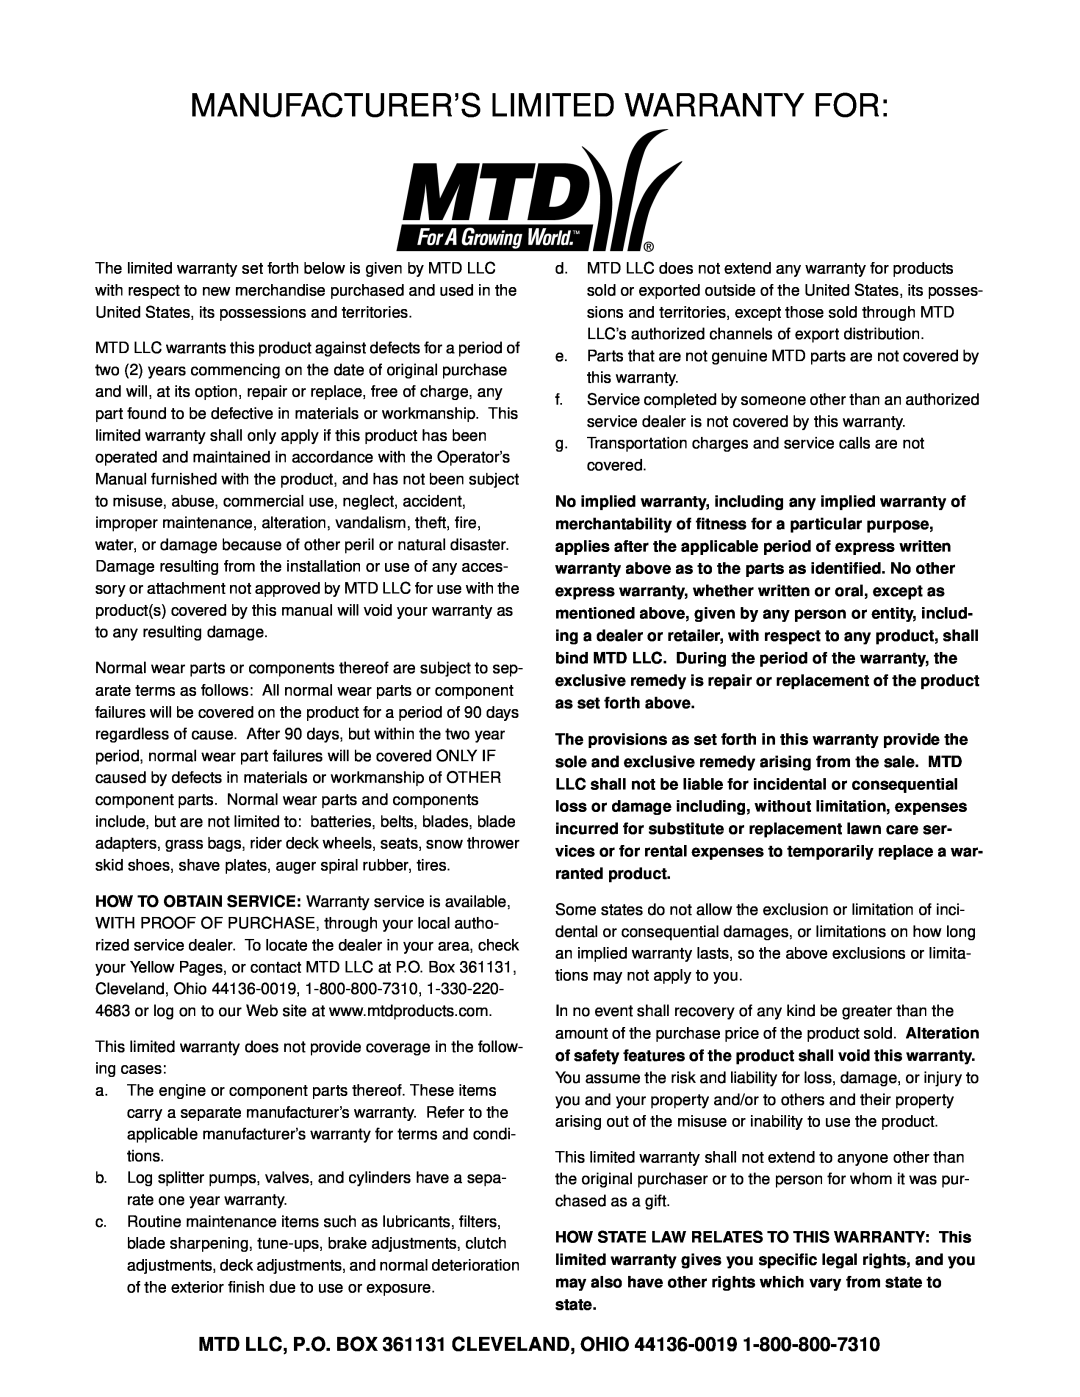 MTD 530, 520 manual Manufacturer’S Limited Warranty For, MTD LLC, P.O. BOX 361131 CLEVELAND, OHIO 44136-0019 